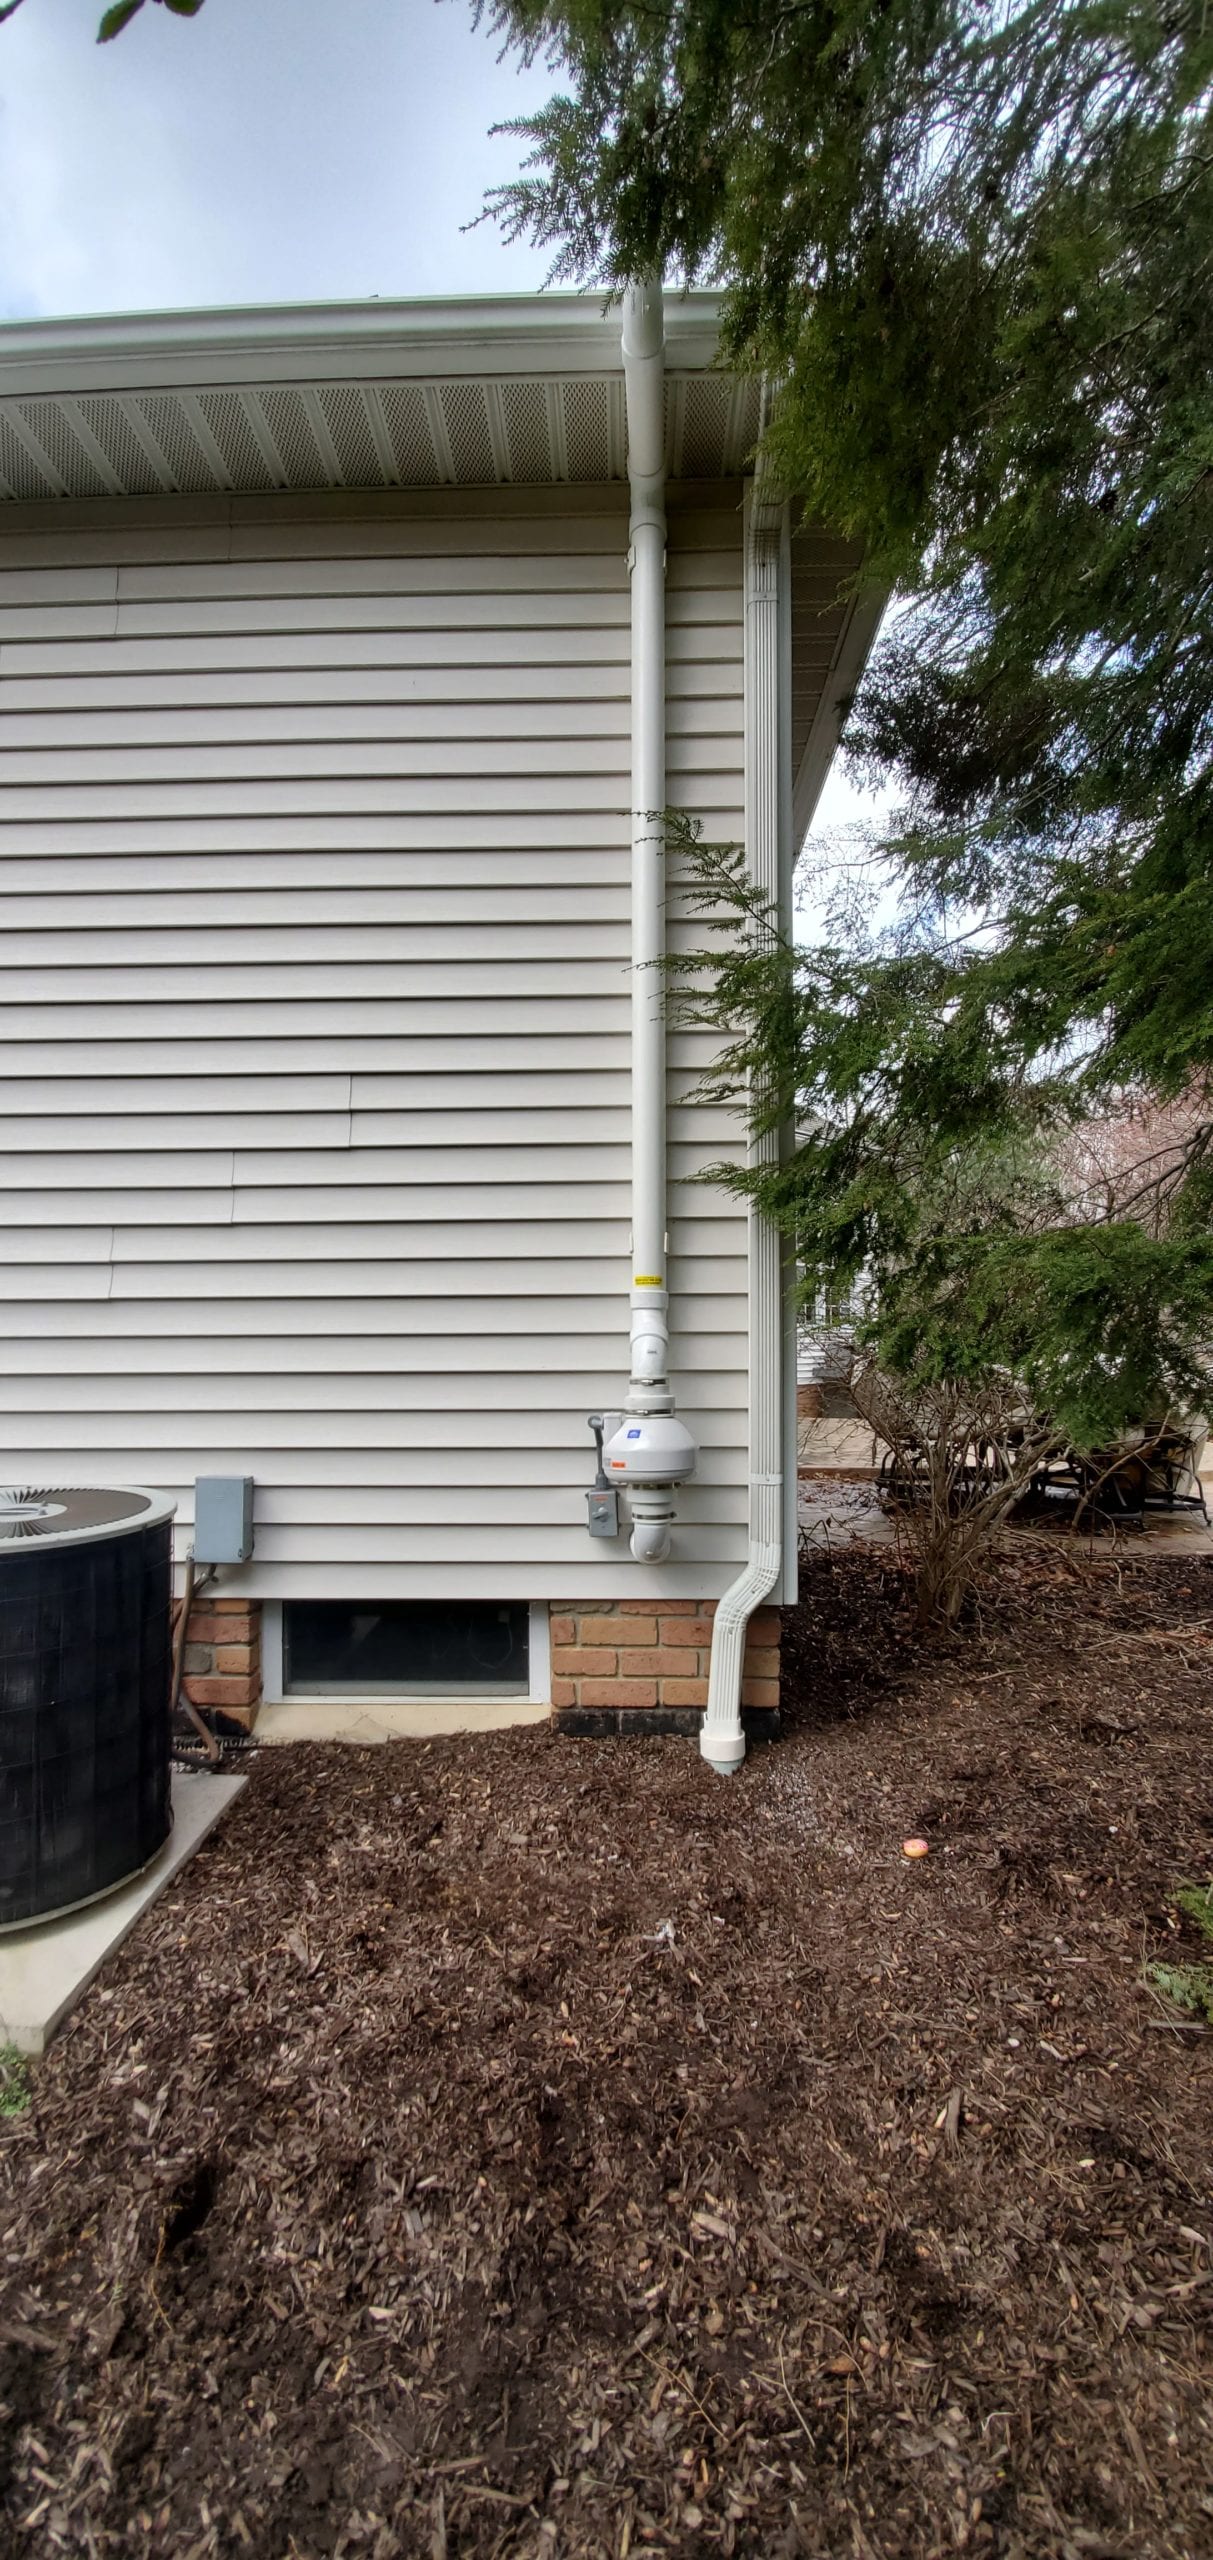 Exterior Radon Mitigation system fan and electrical shutoff